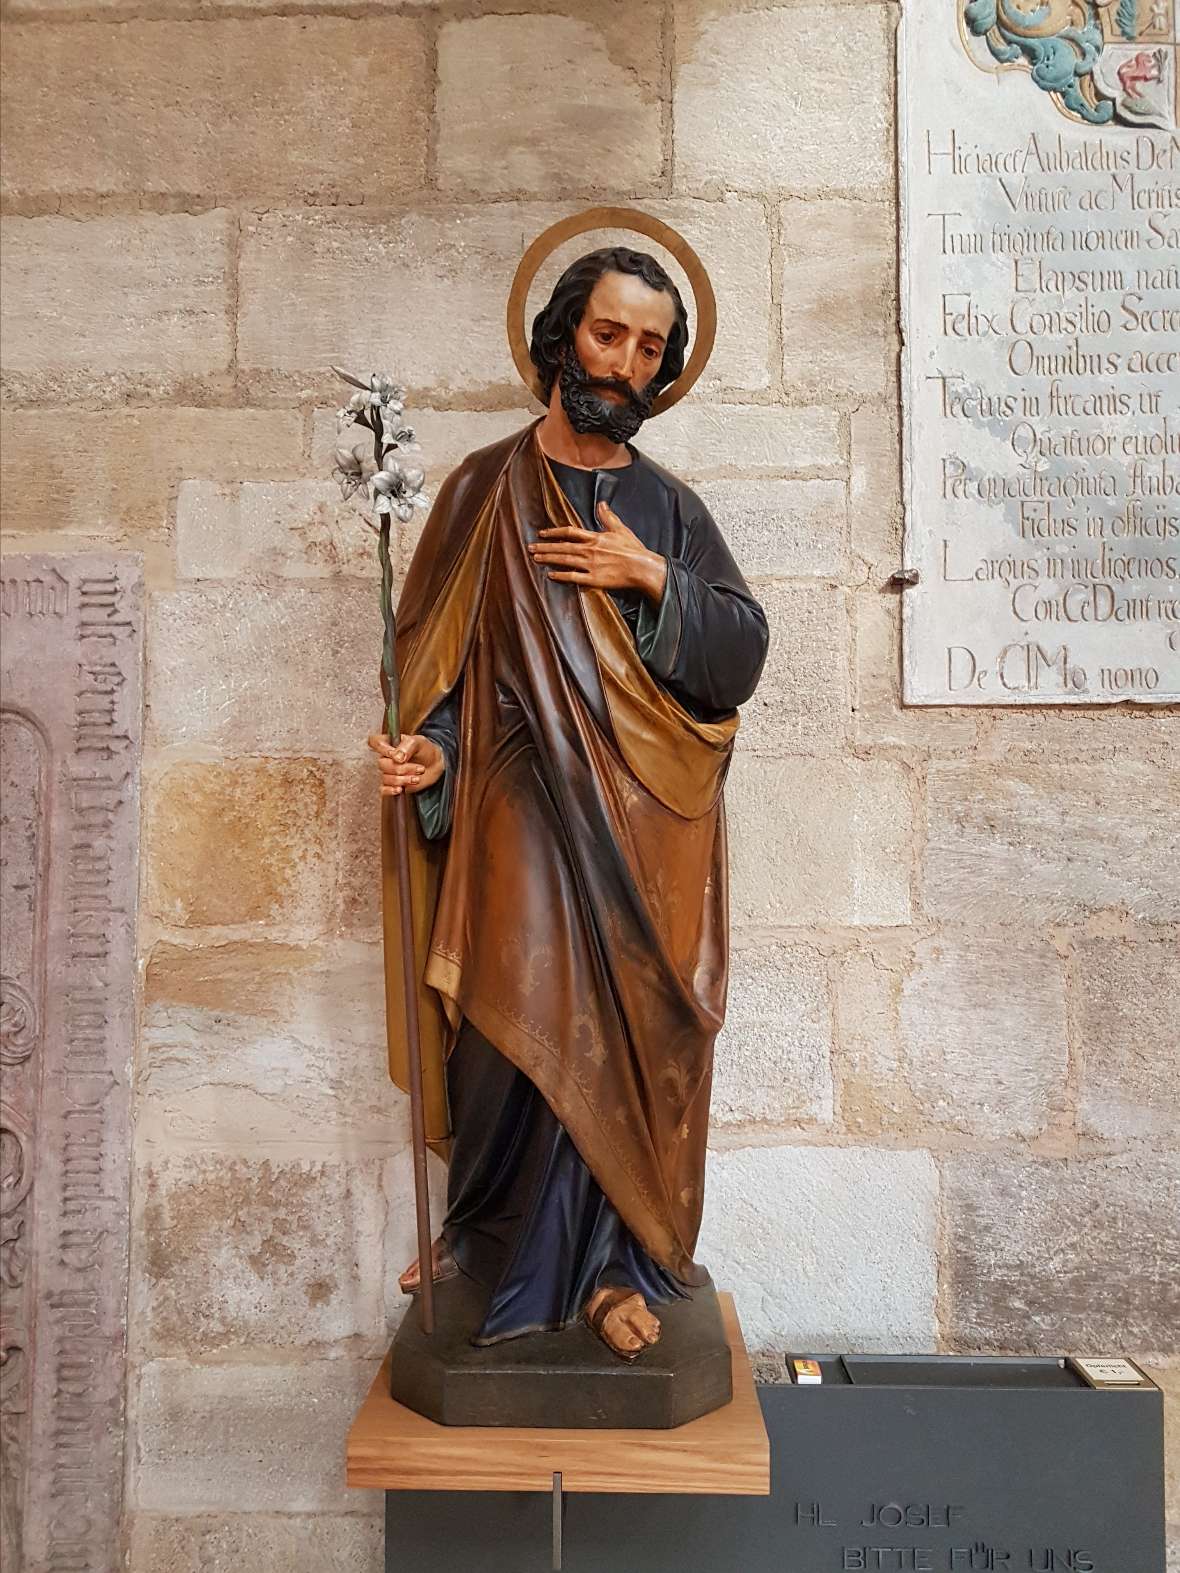 Statue des heiligen Joseph